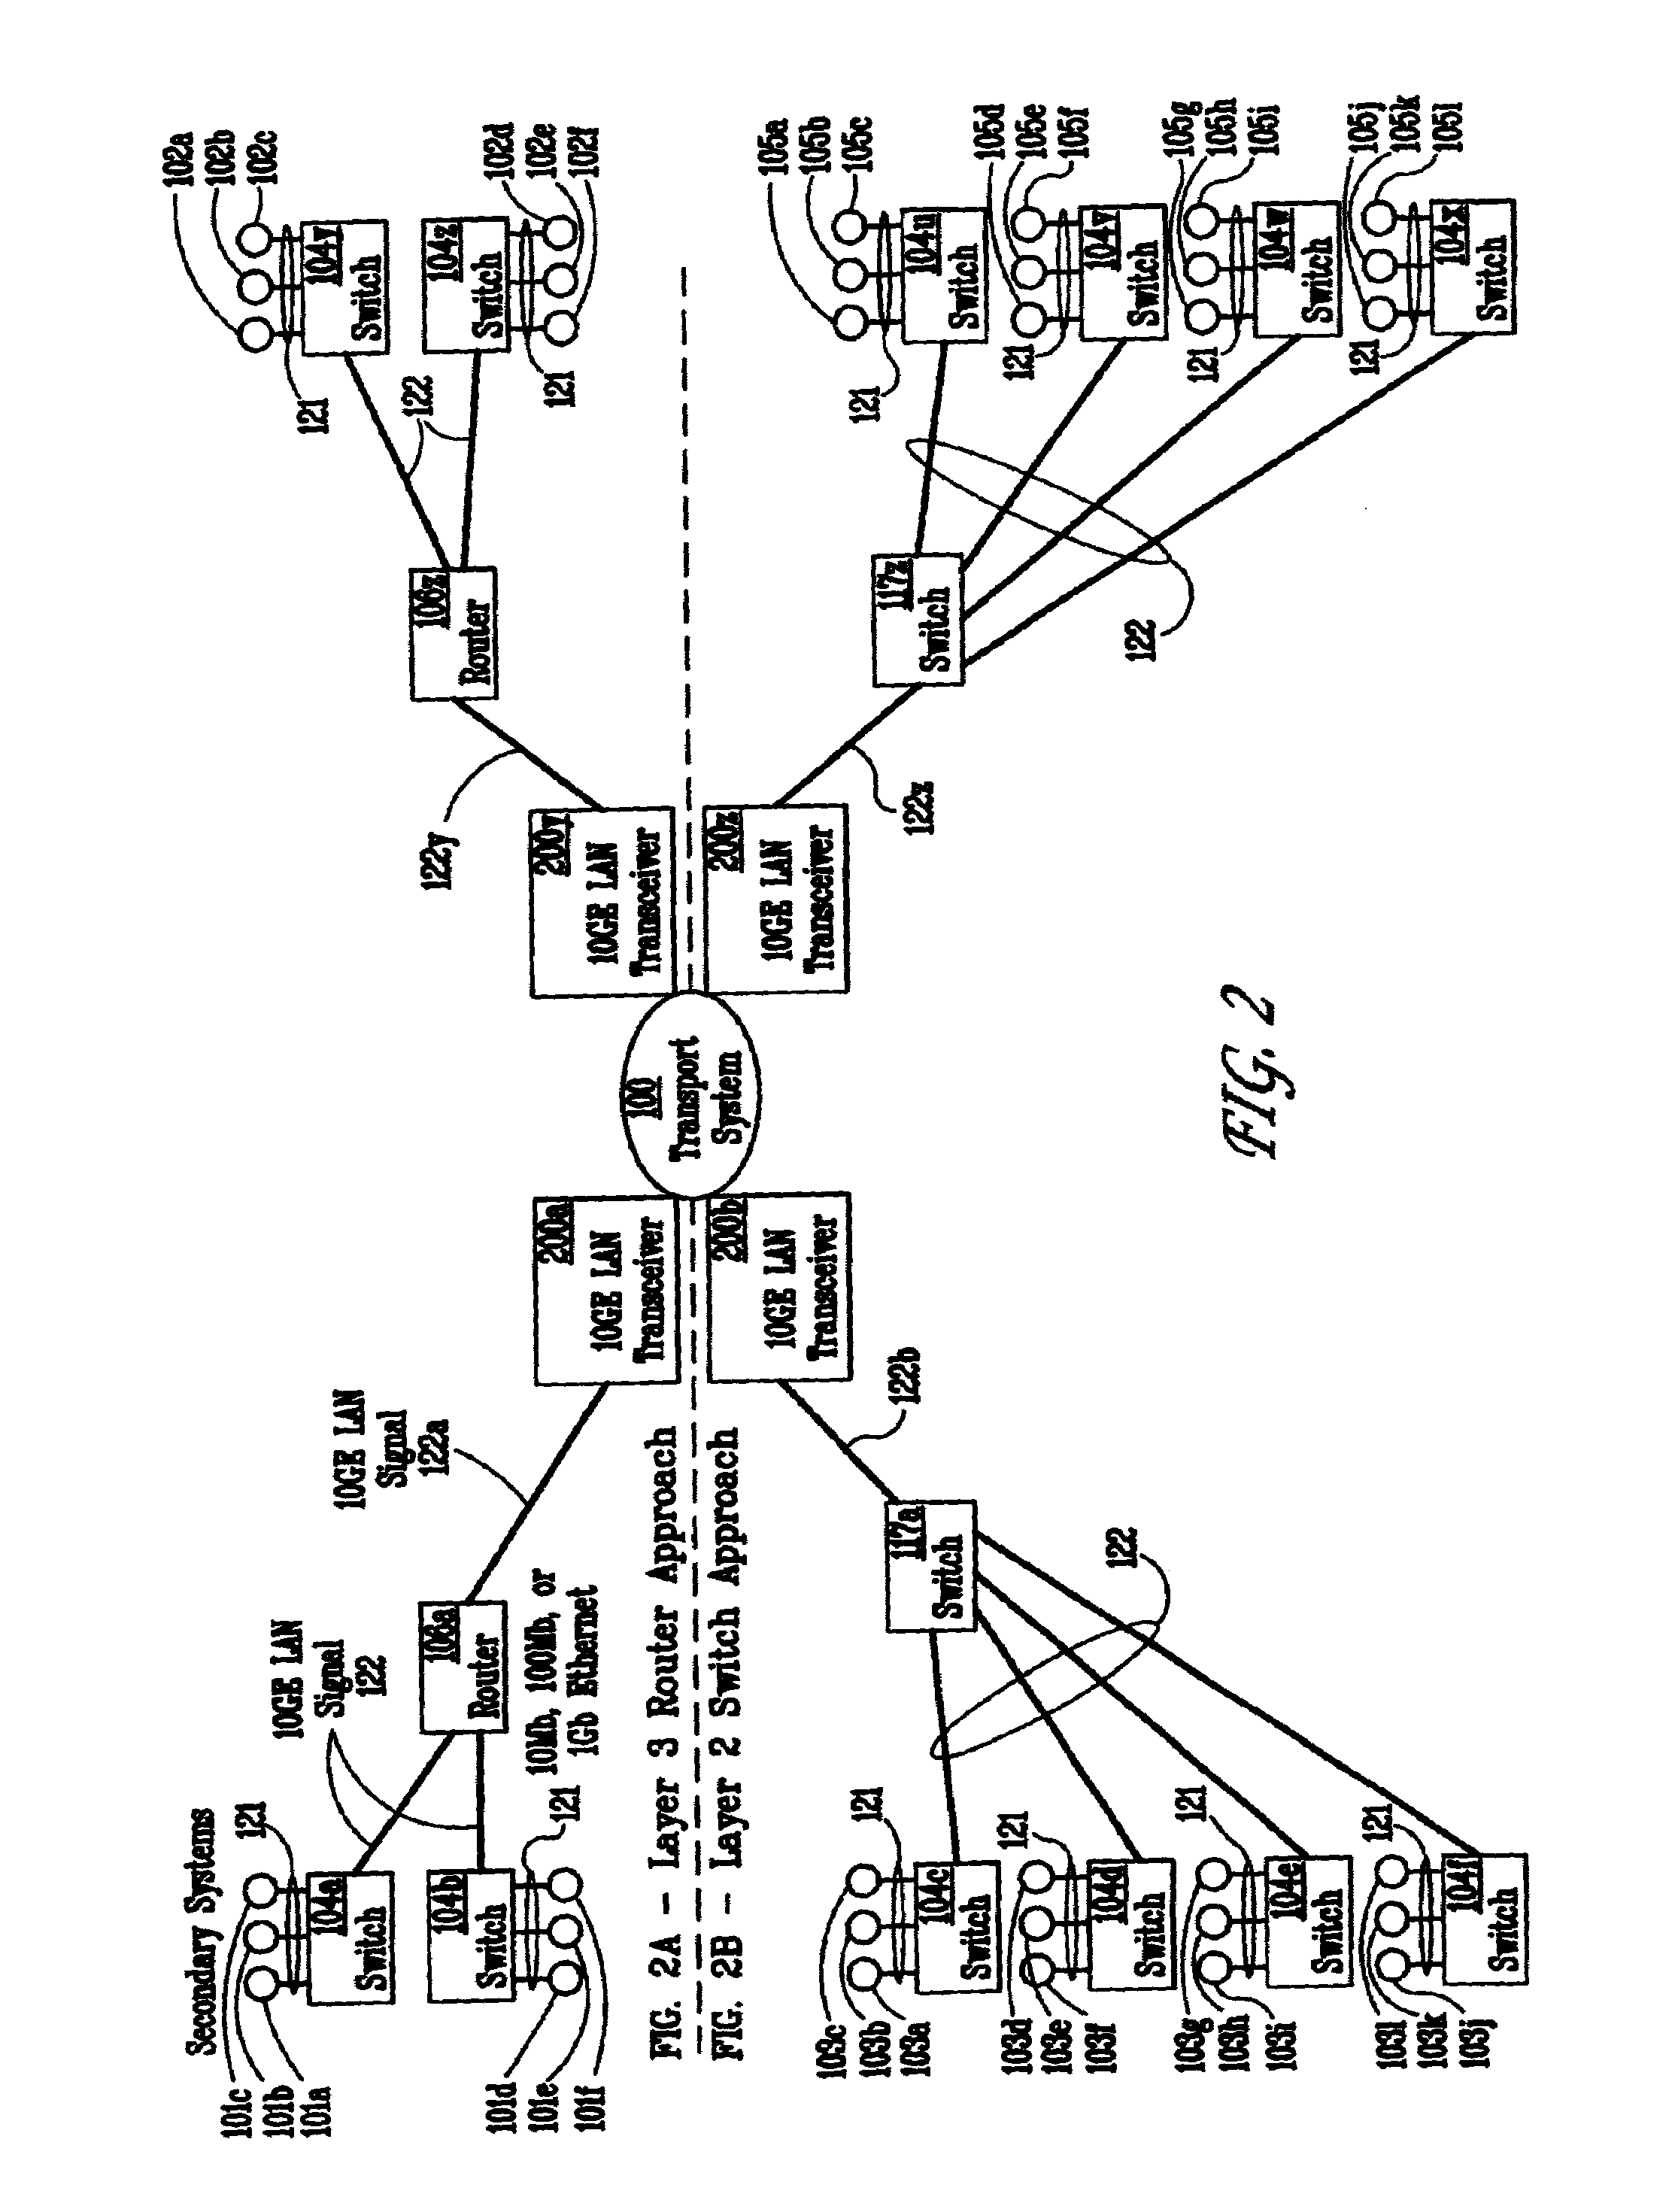 Apparatus and method for transmitting 10 Gigabit Ethernet LAN signals over a transport system